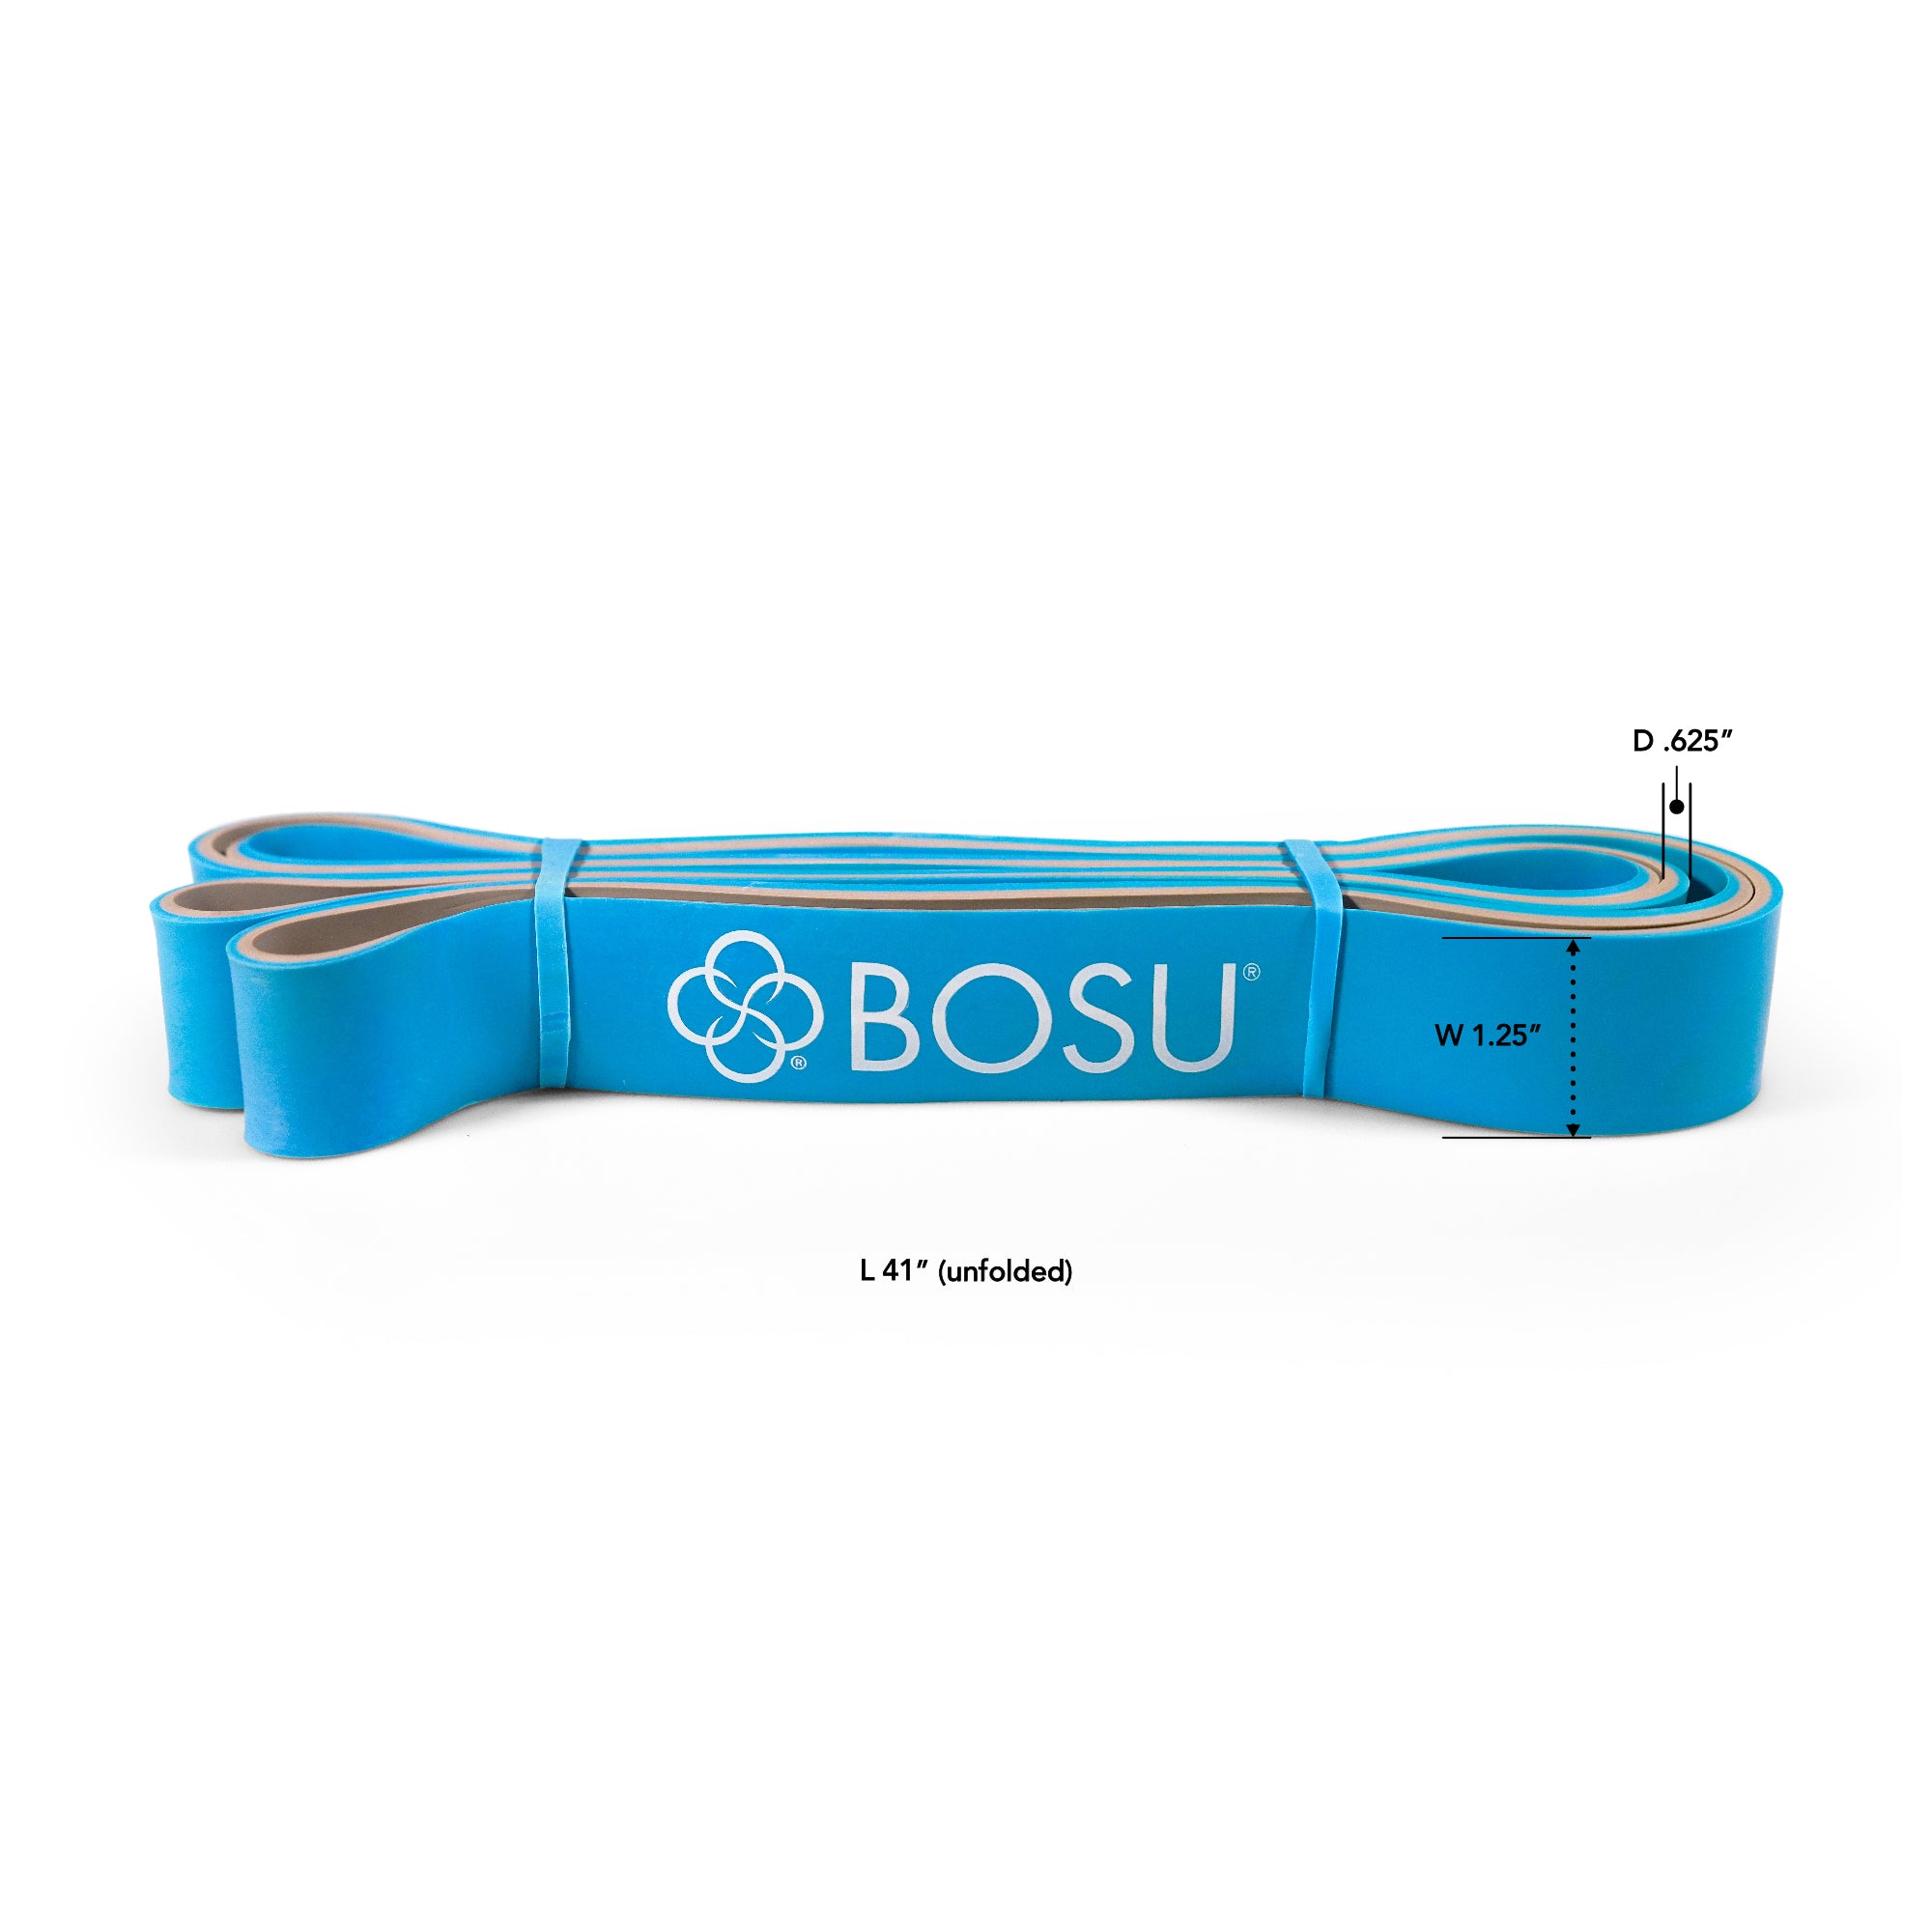 BOSU® Resistance Bands